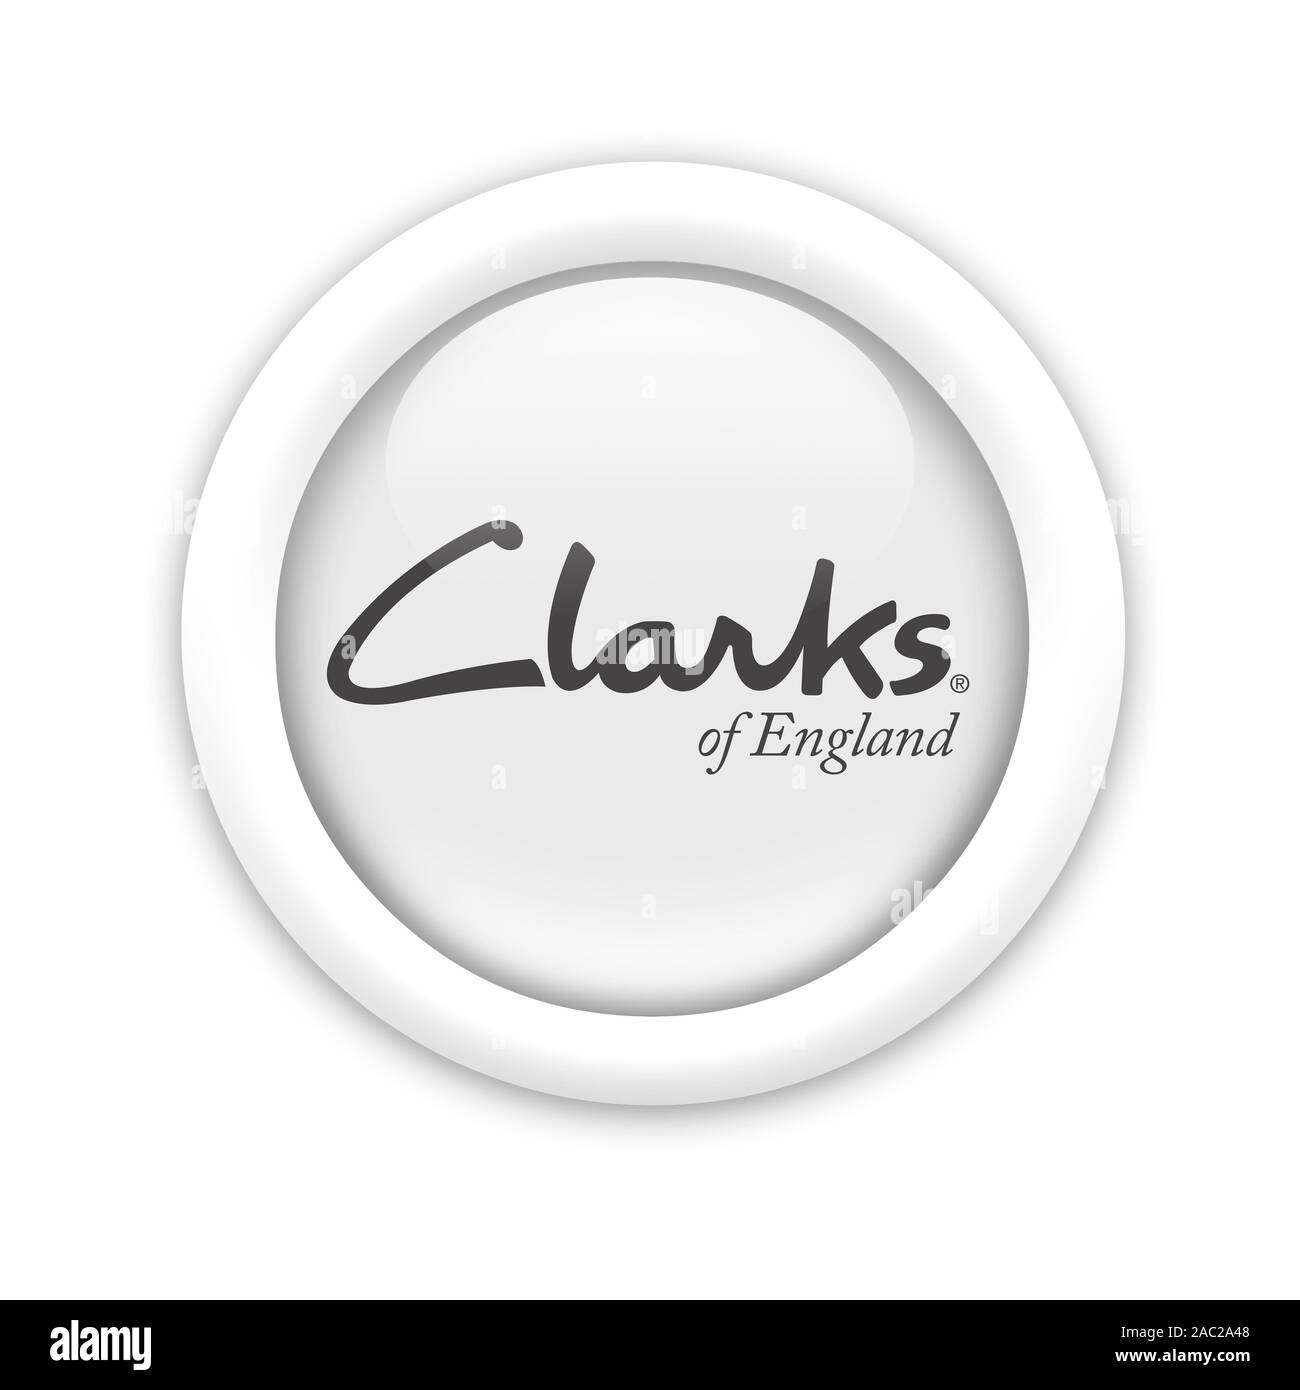 Clarks of England logo Stock Photo - Alamy